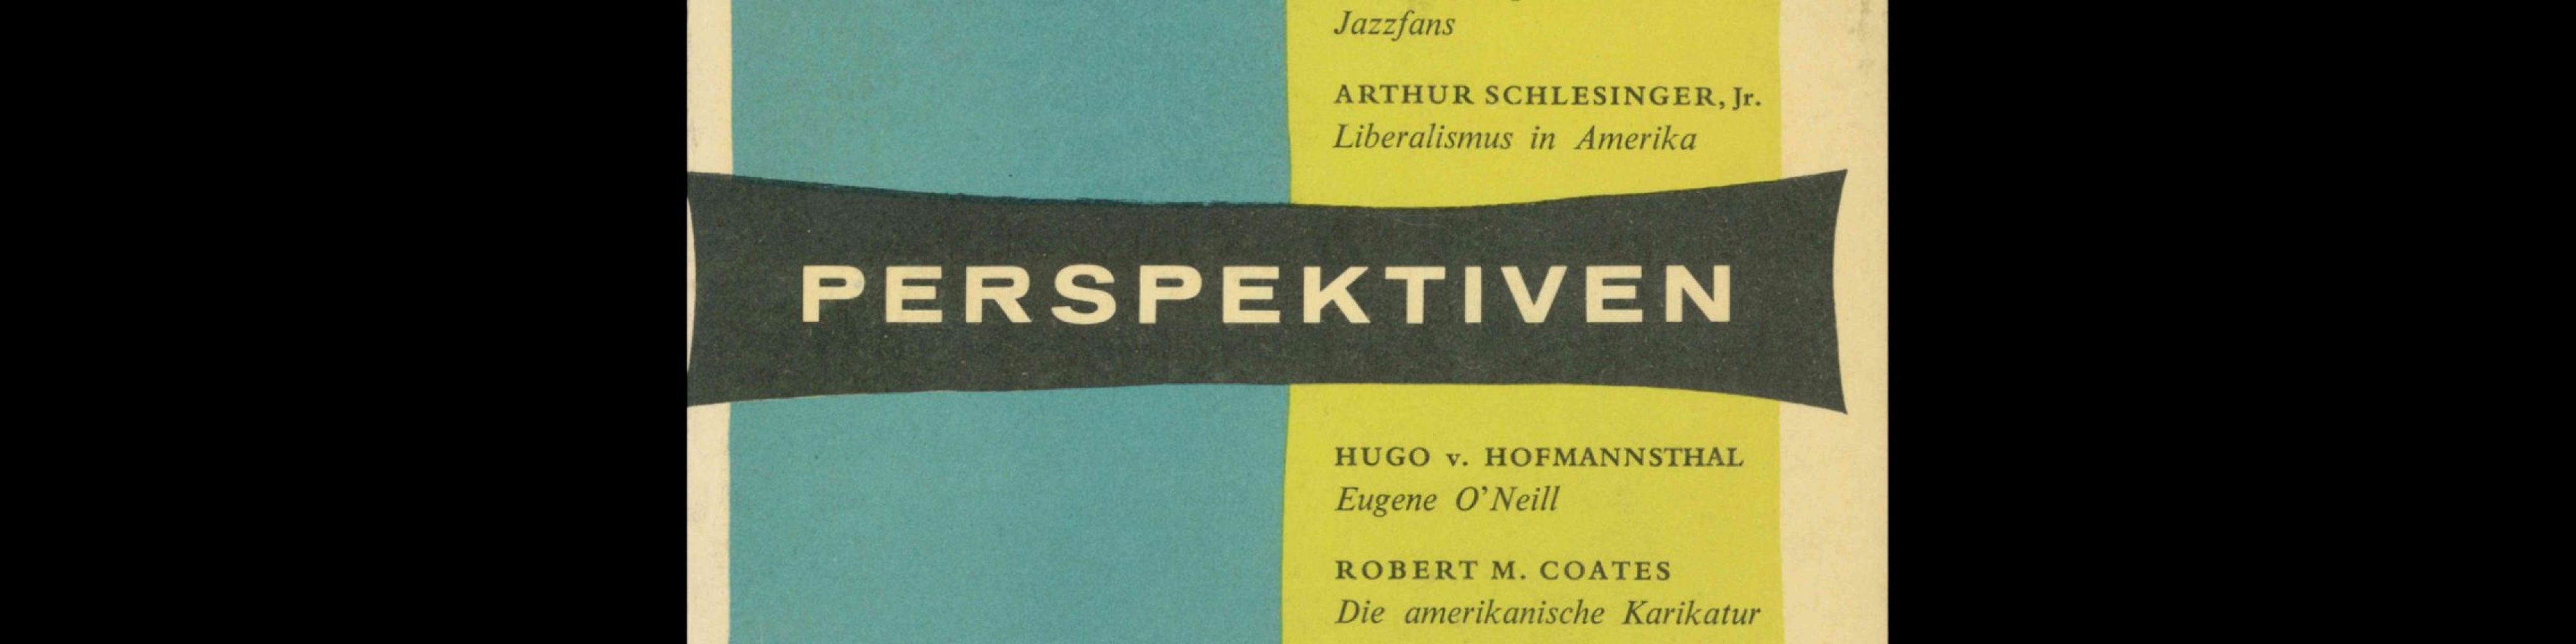 Perspektiven, Literatur, Kunst, Musik, 14, 1956. Cover design by Alvin Lustig